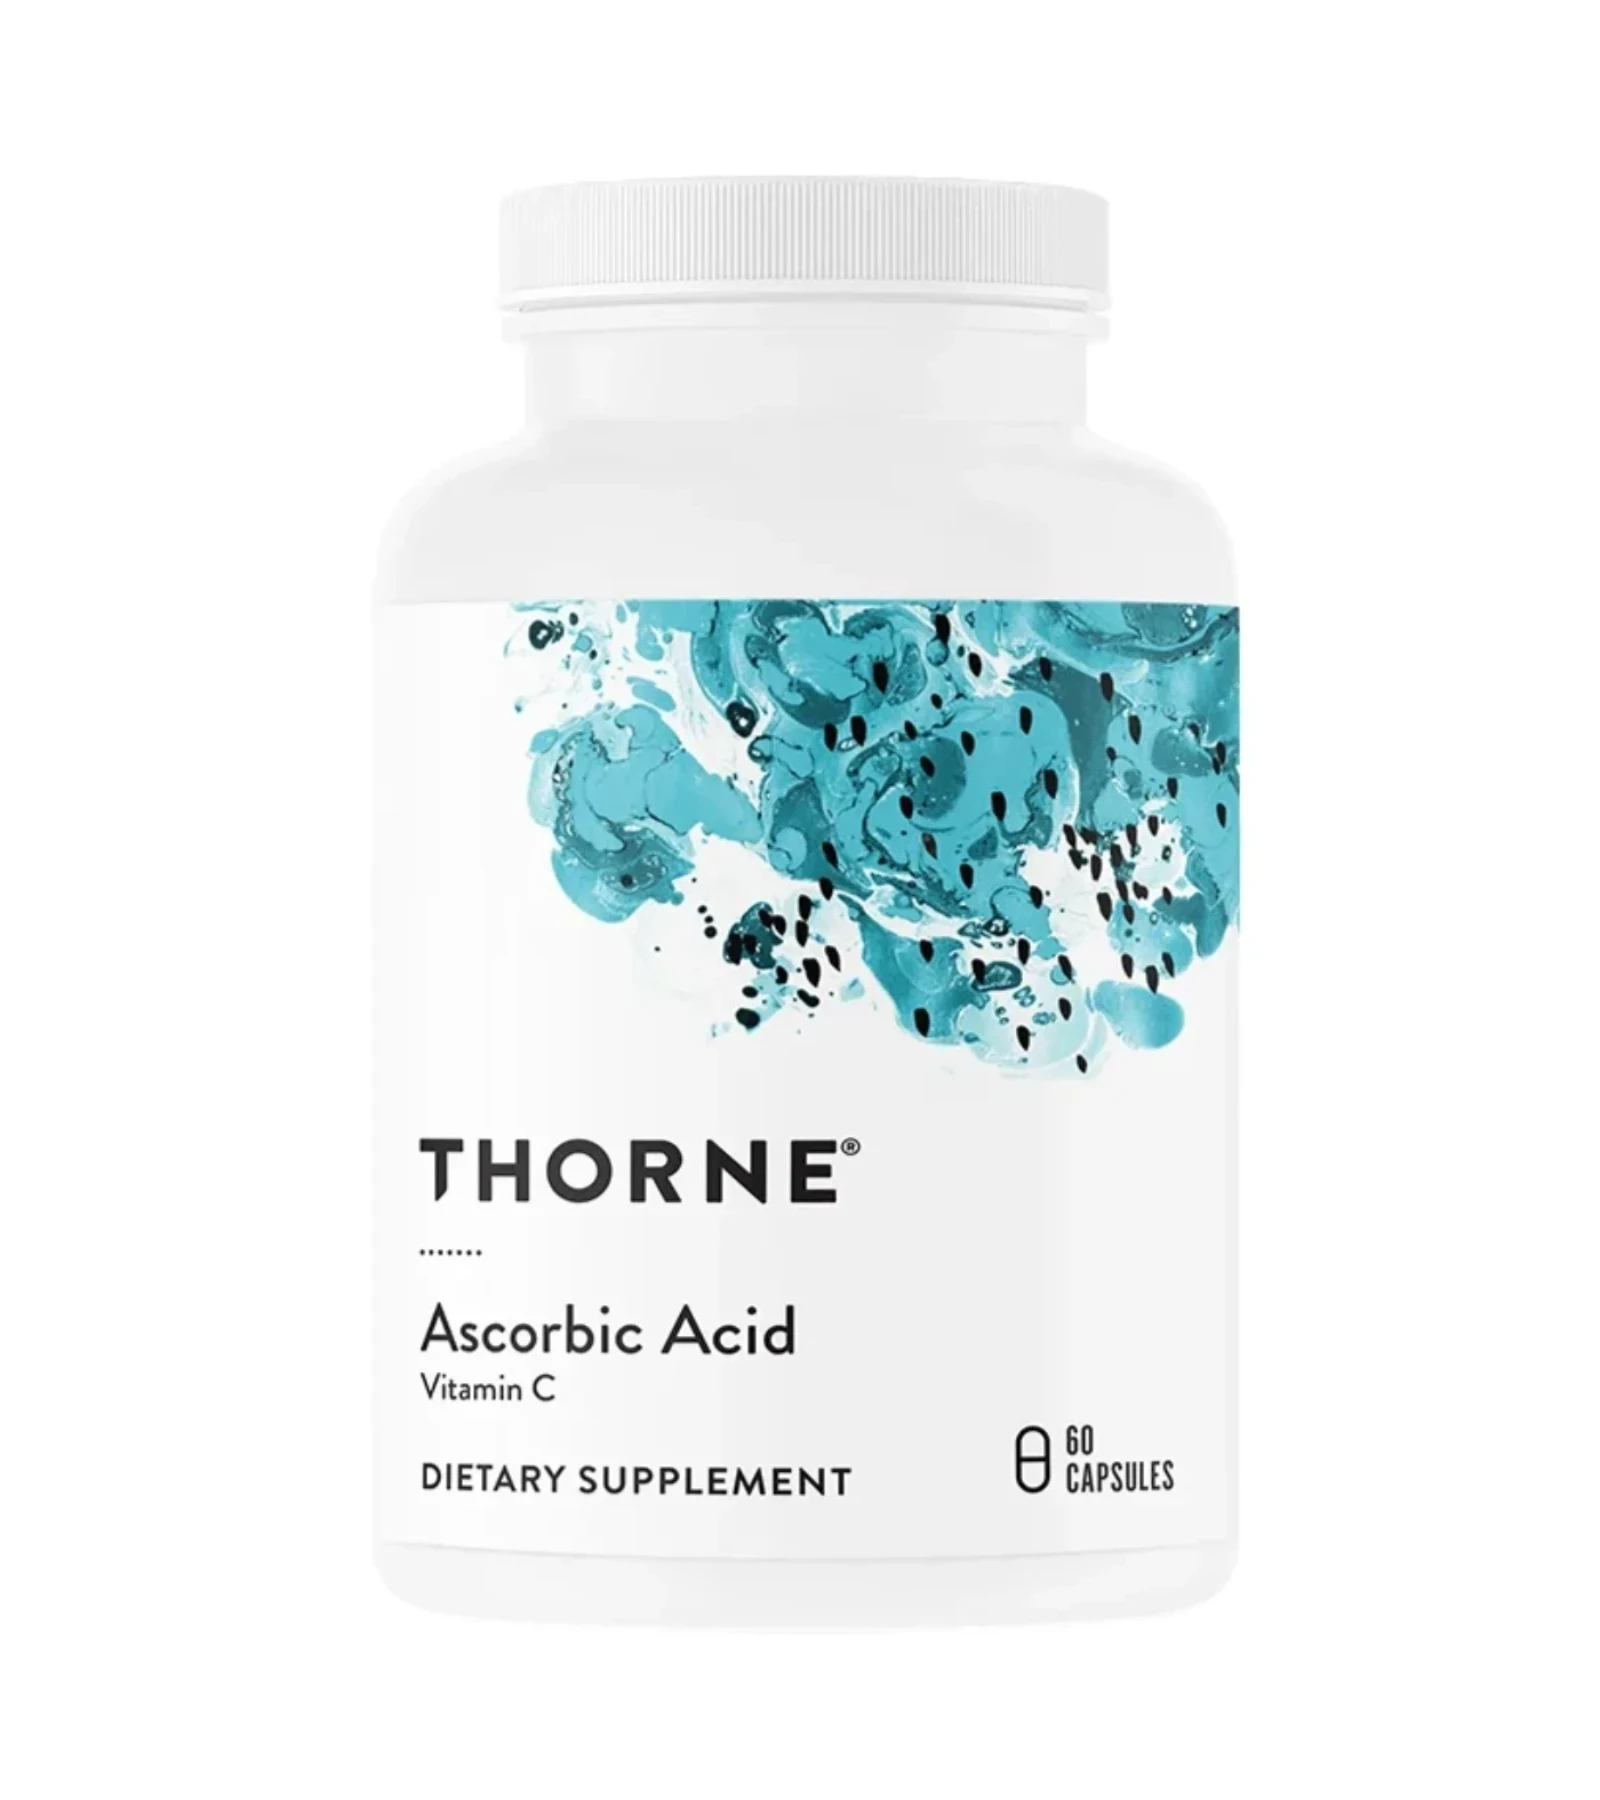 Thorne Vitamin-C Ascorbic Acid Supplement Bottle